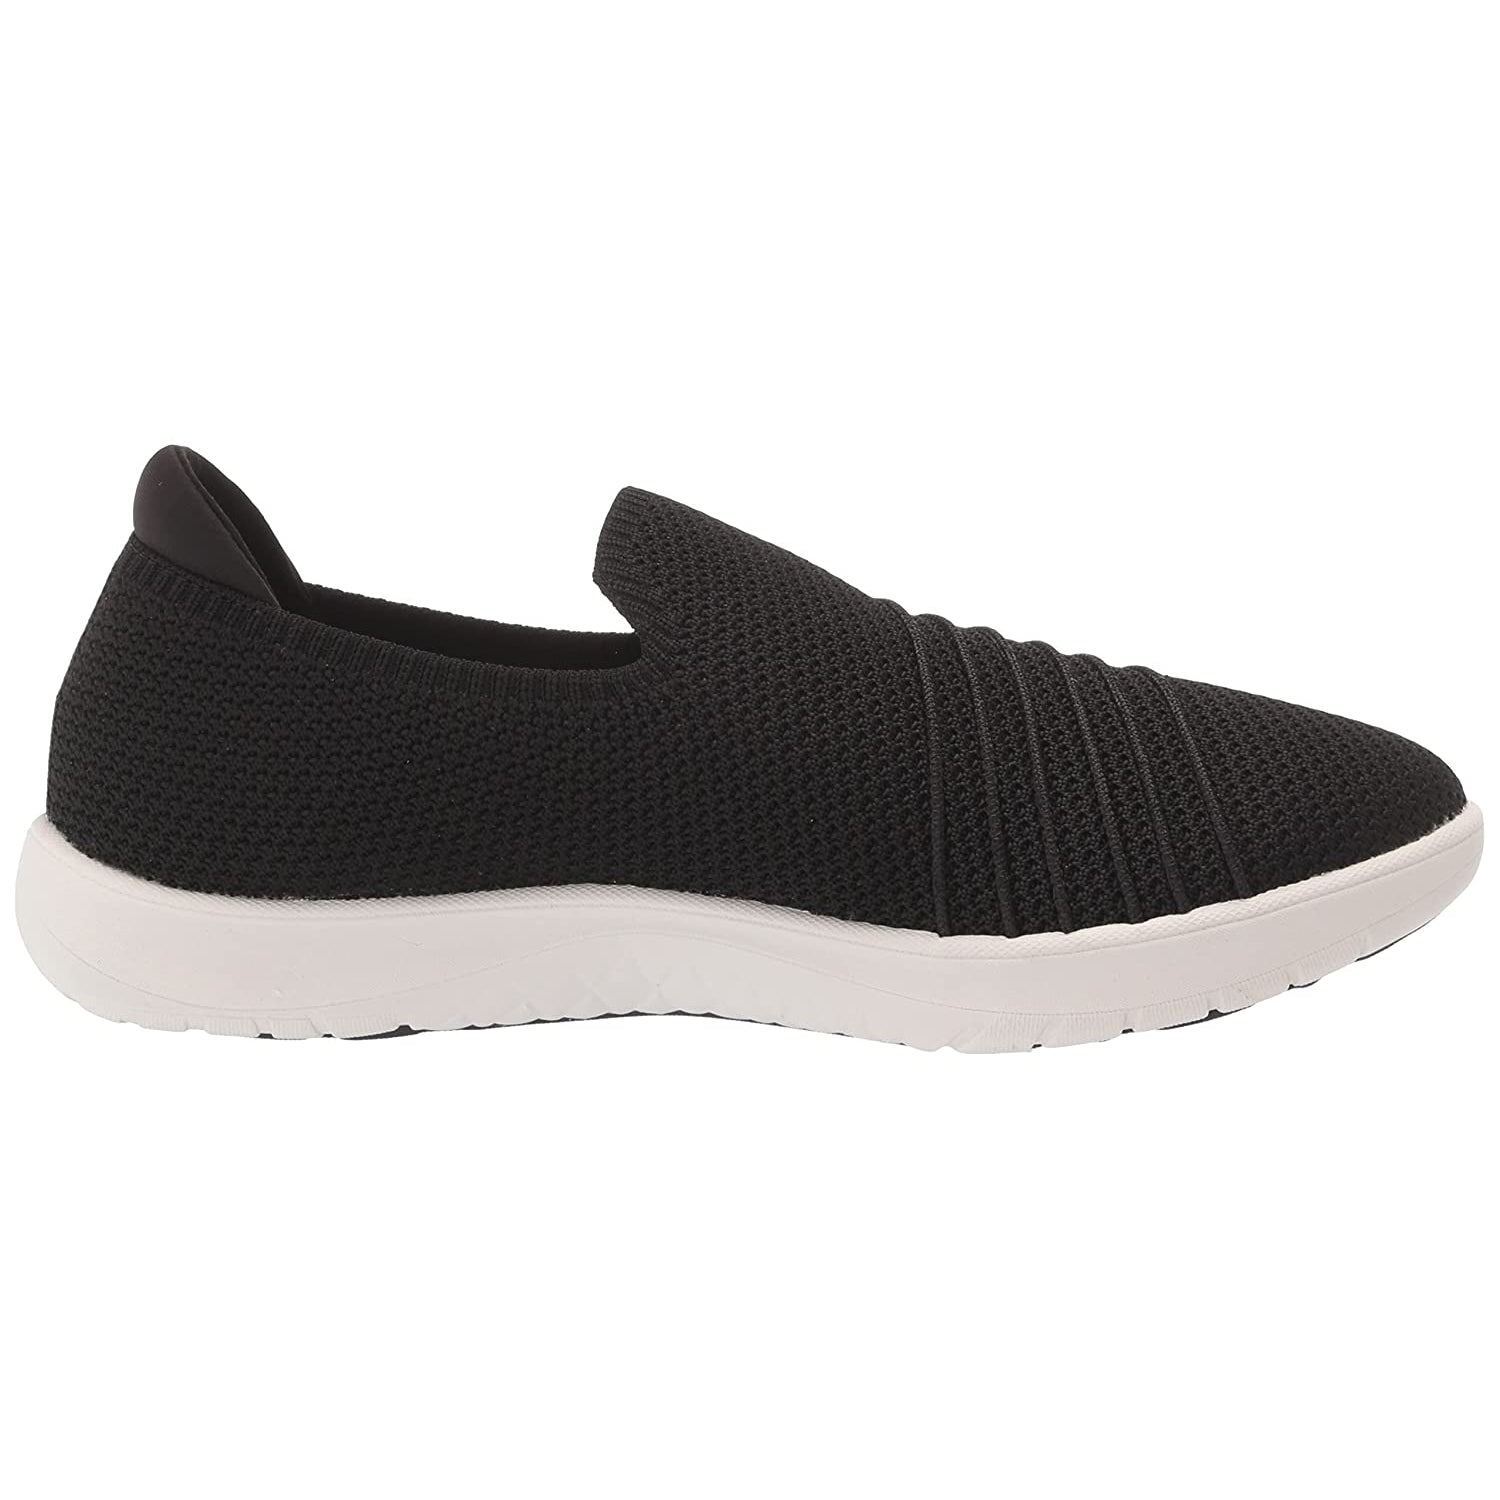 Clarks Women's Adella Step Casual Shoes, Black Knit - Best Price online Prokicksports.com